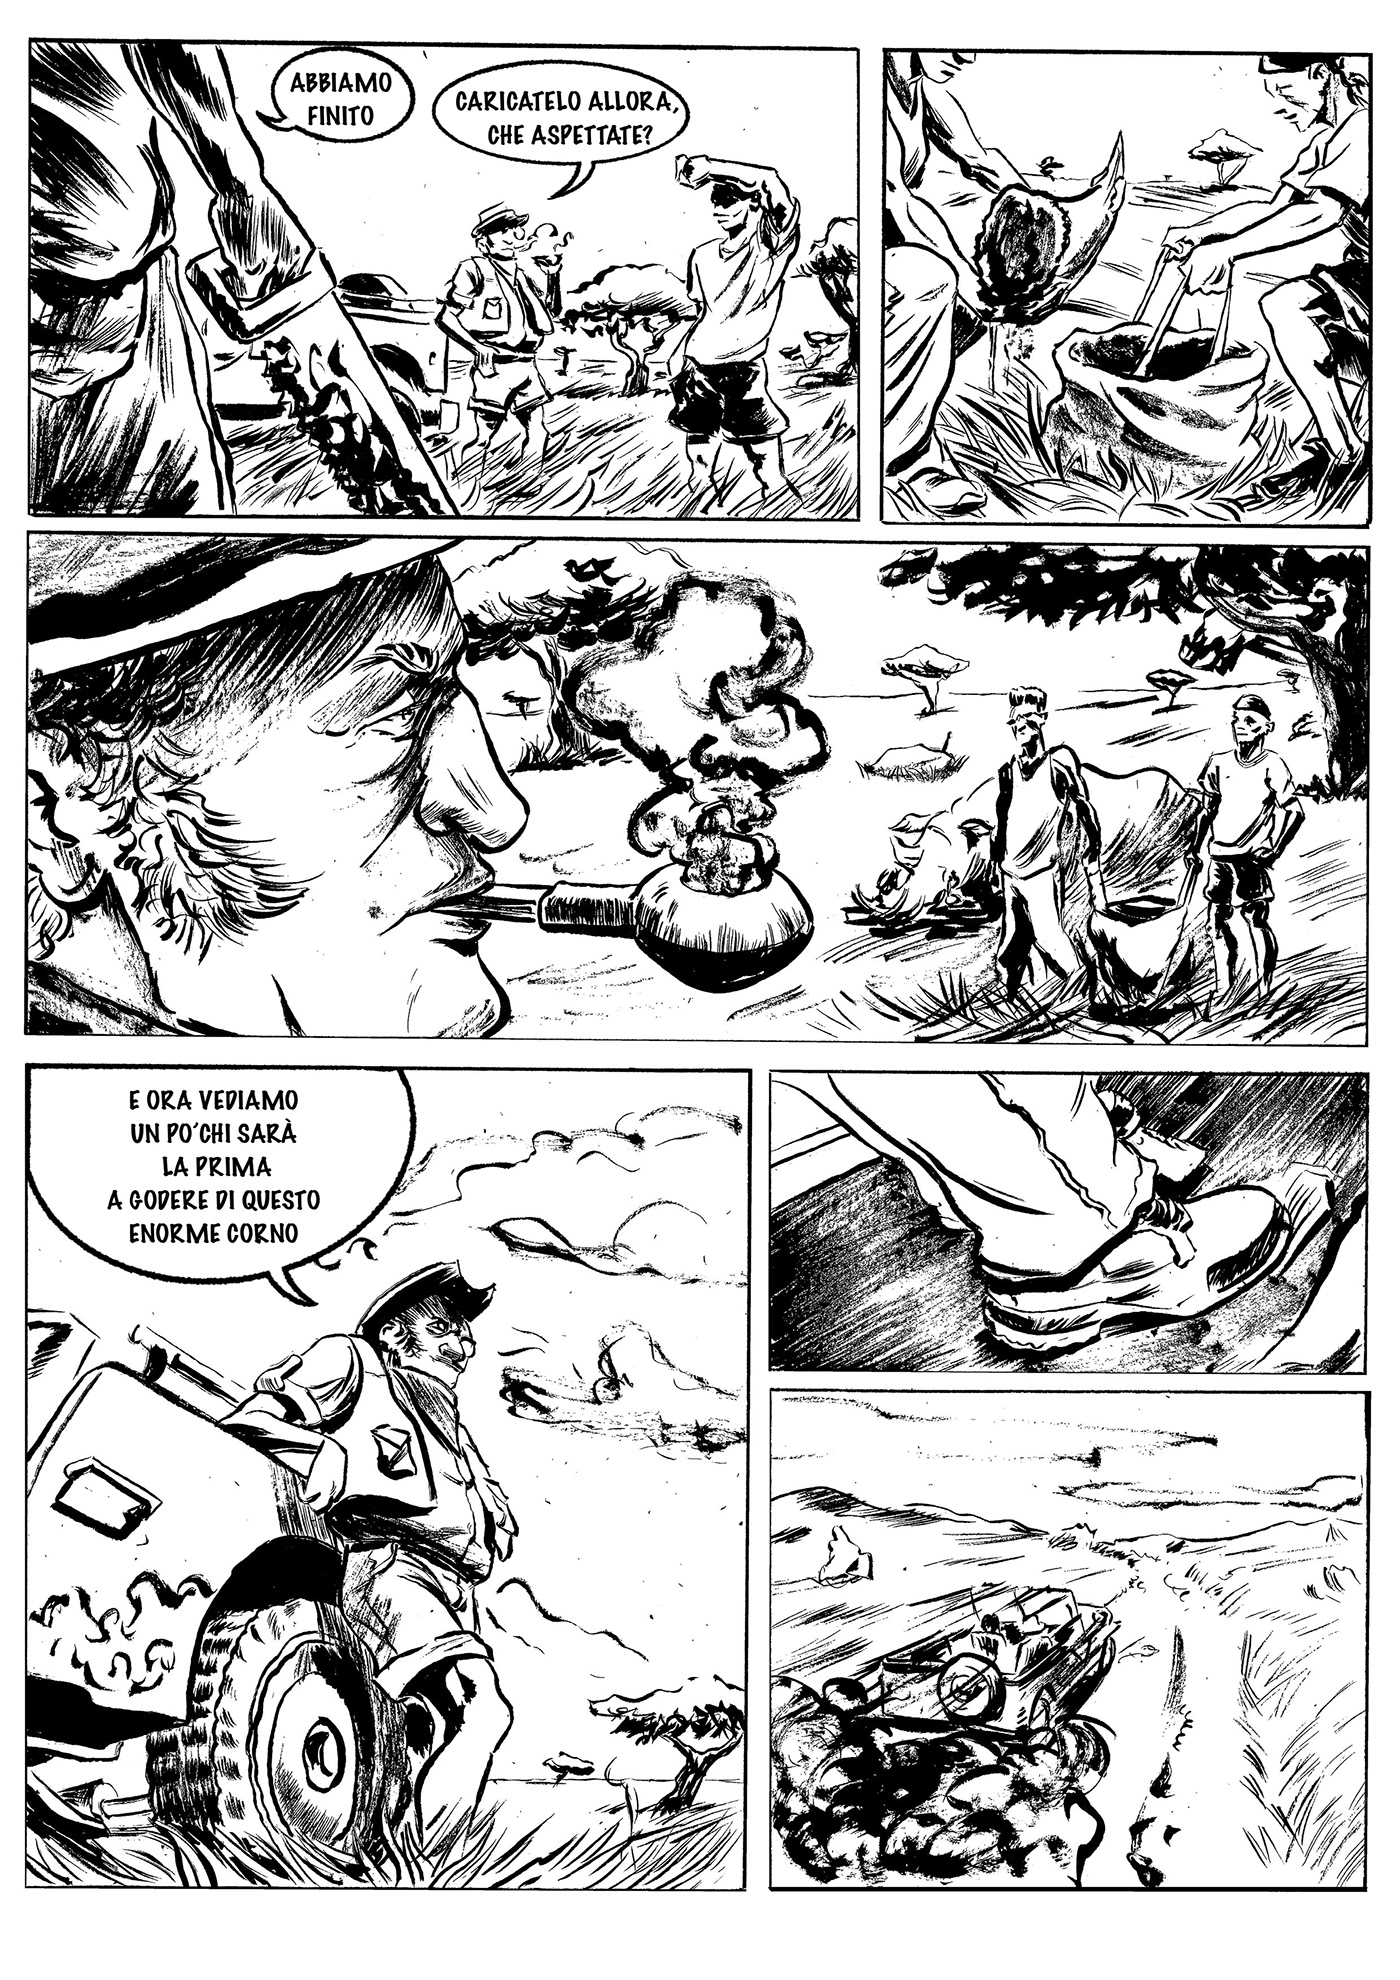 fumetto Comic Book Graphic Novel comic Drawing  storyboard storytelling   cartoon